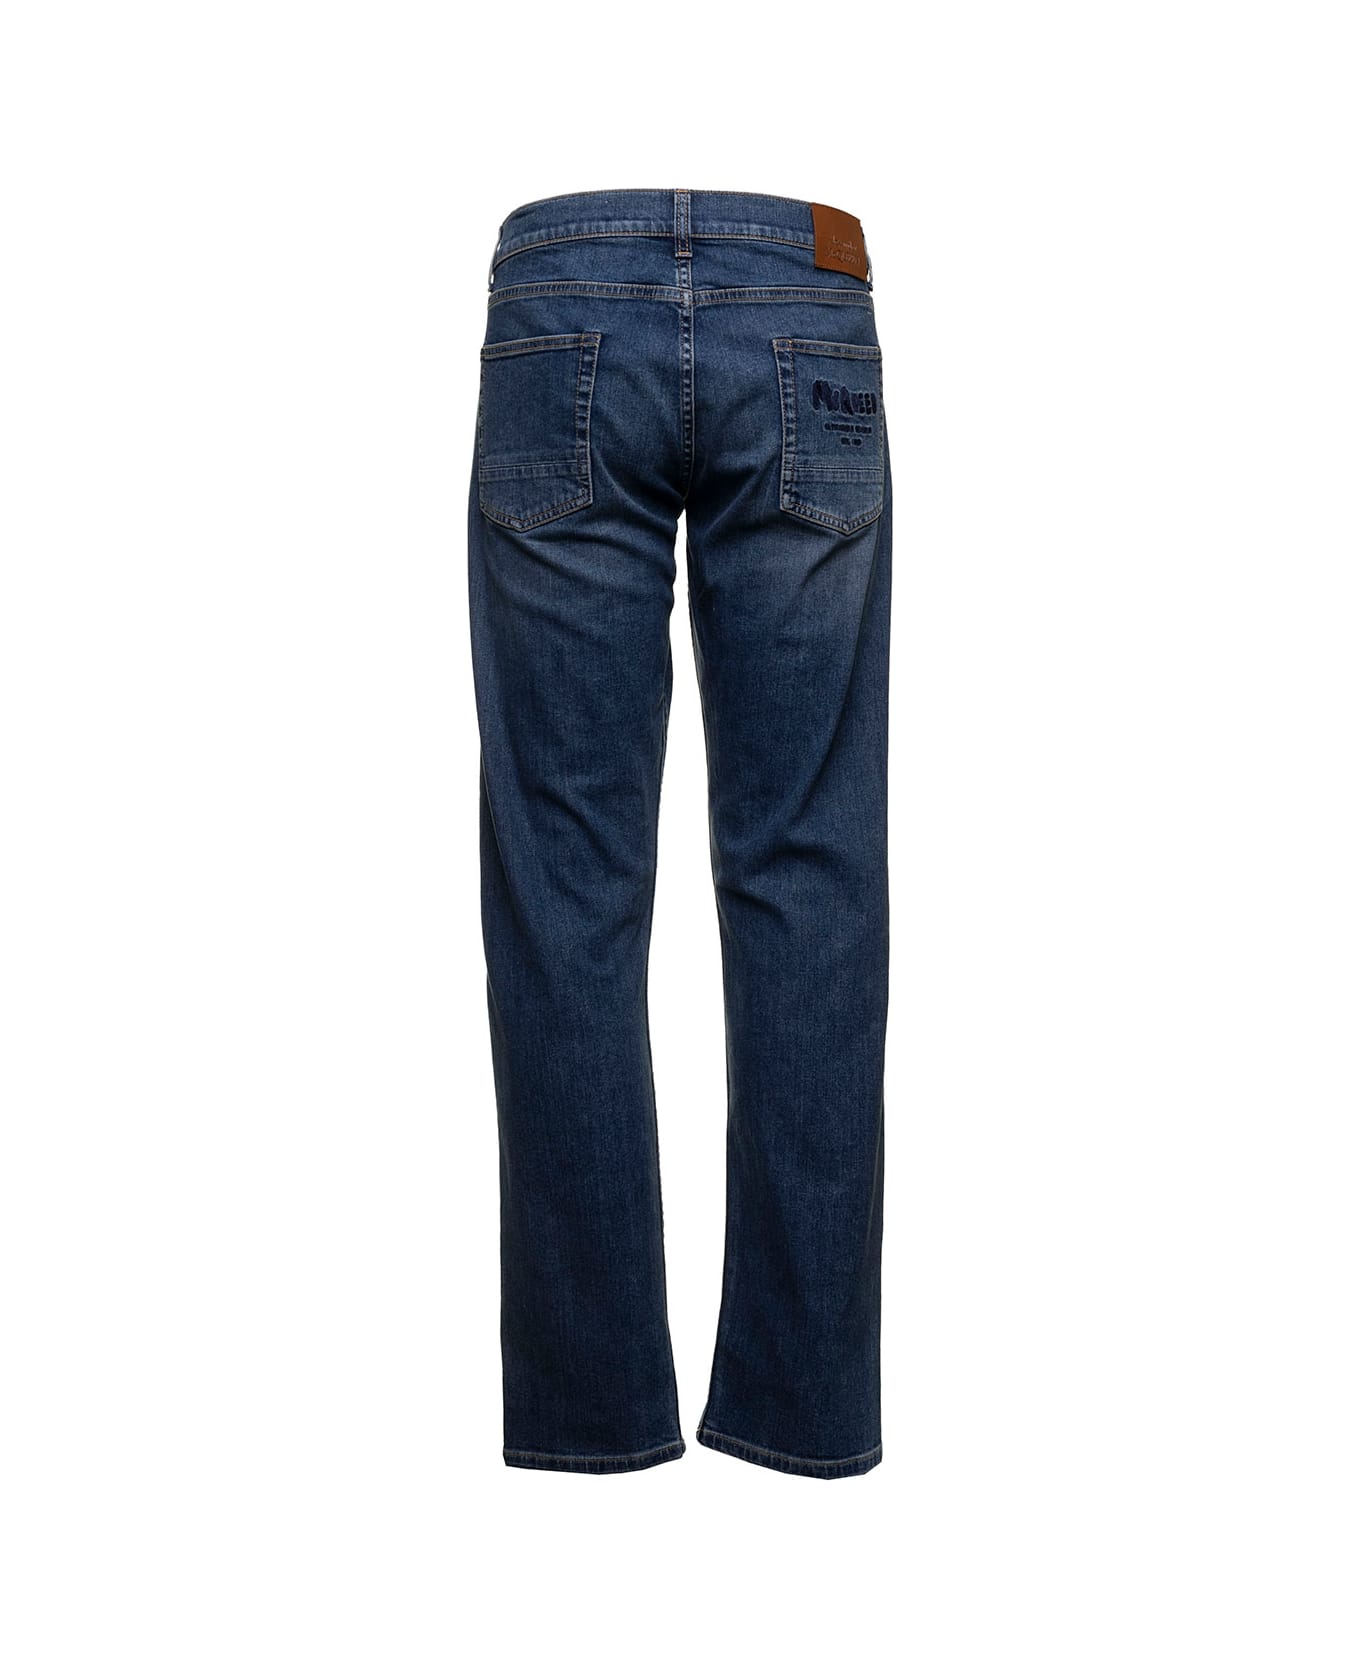 Alexander McQueen Man's Five Pockets Blue Denim Jeans With Logo - DENIM BLUE